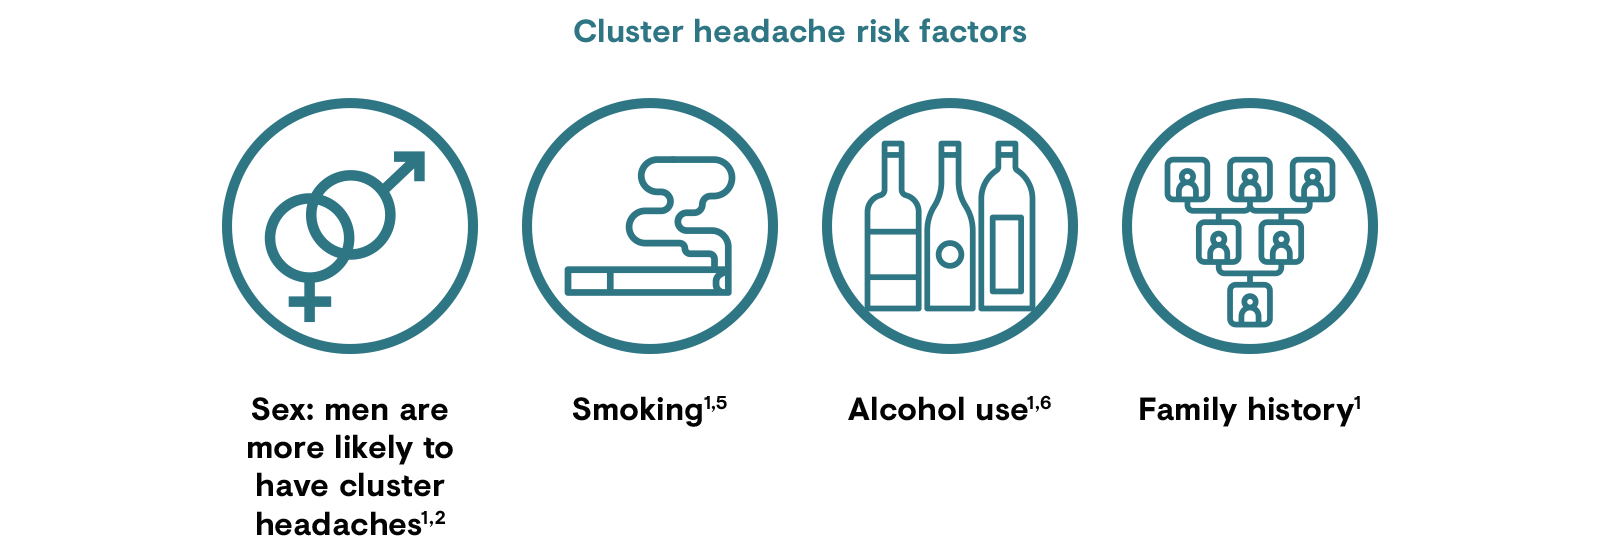 Cluster headache risk factors